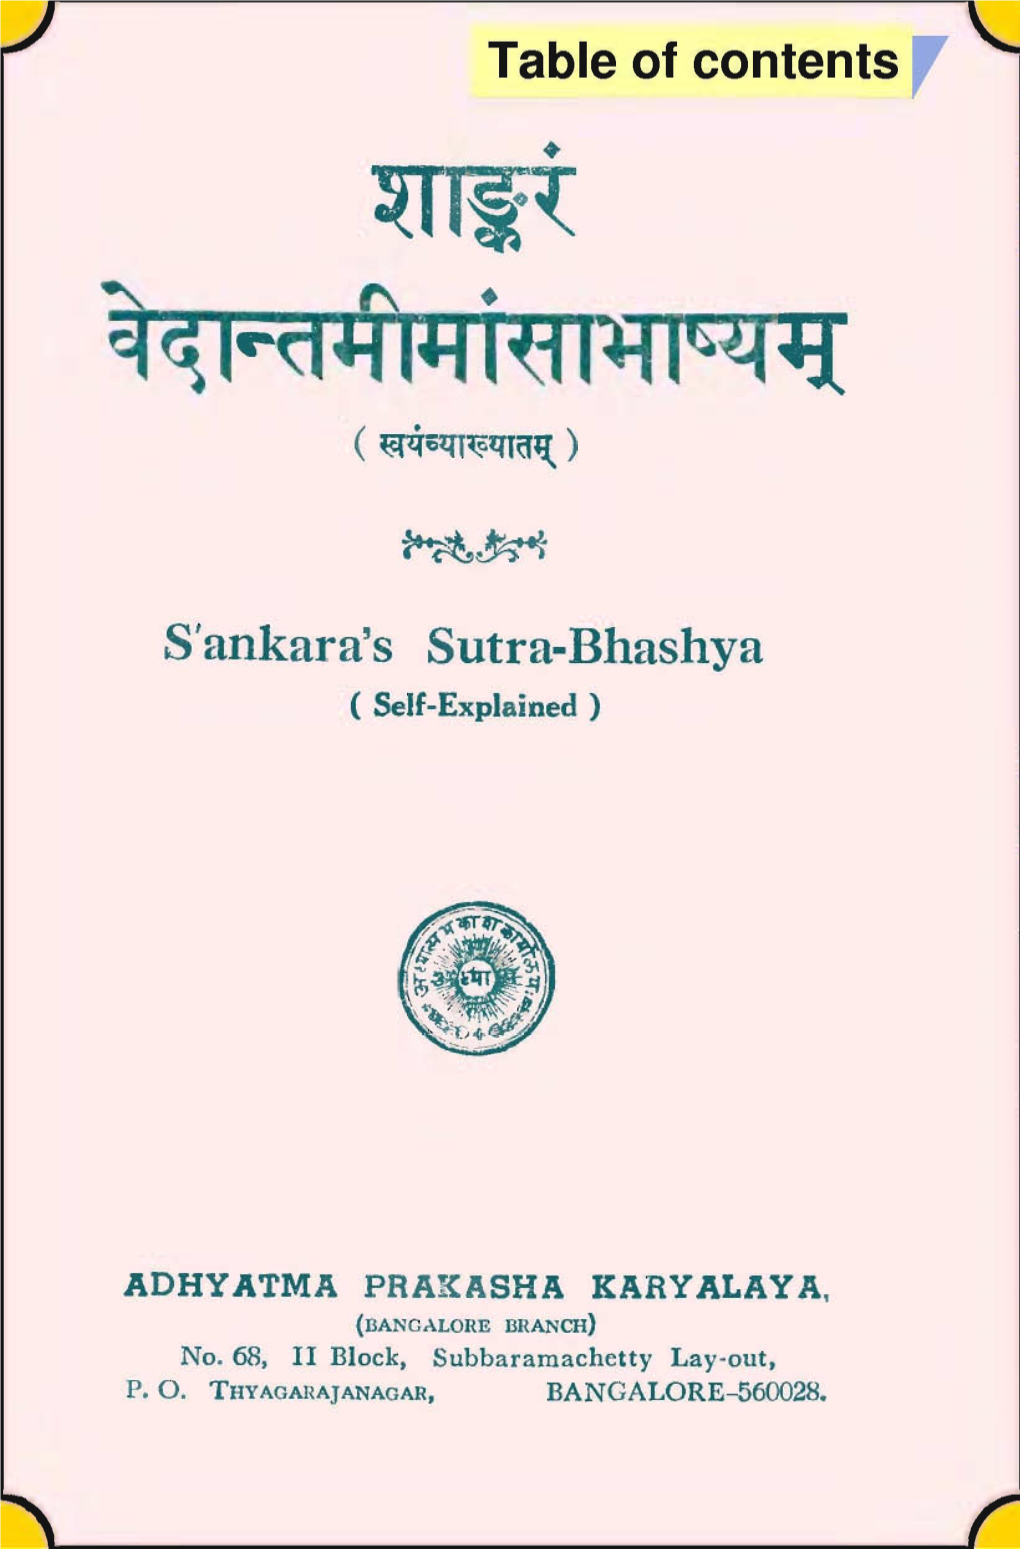 S'ankara's Sutra-Bhashya ( Self-Explained)